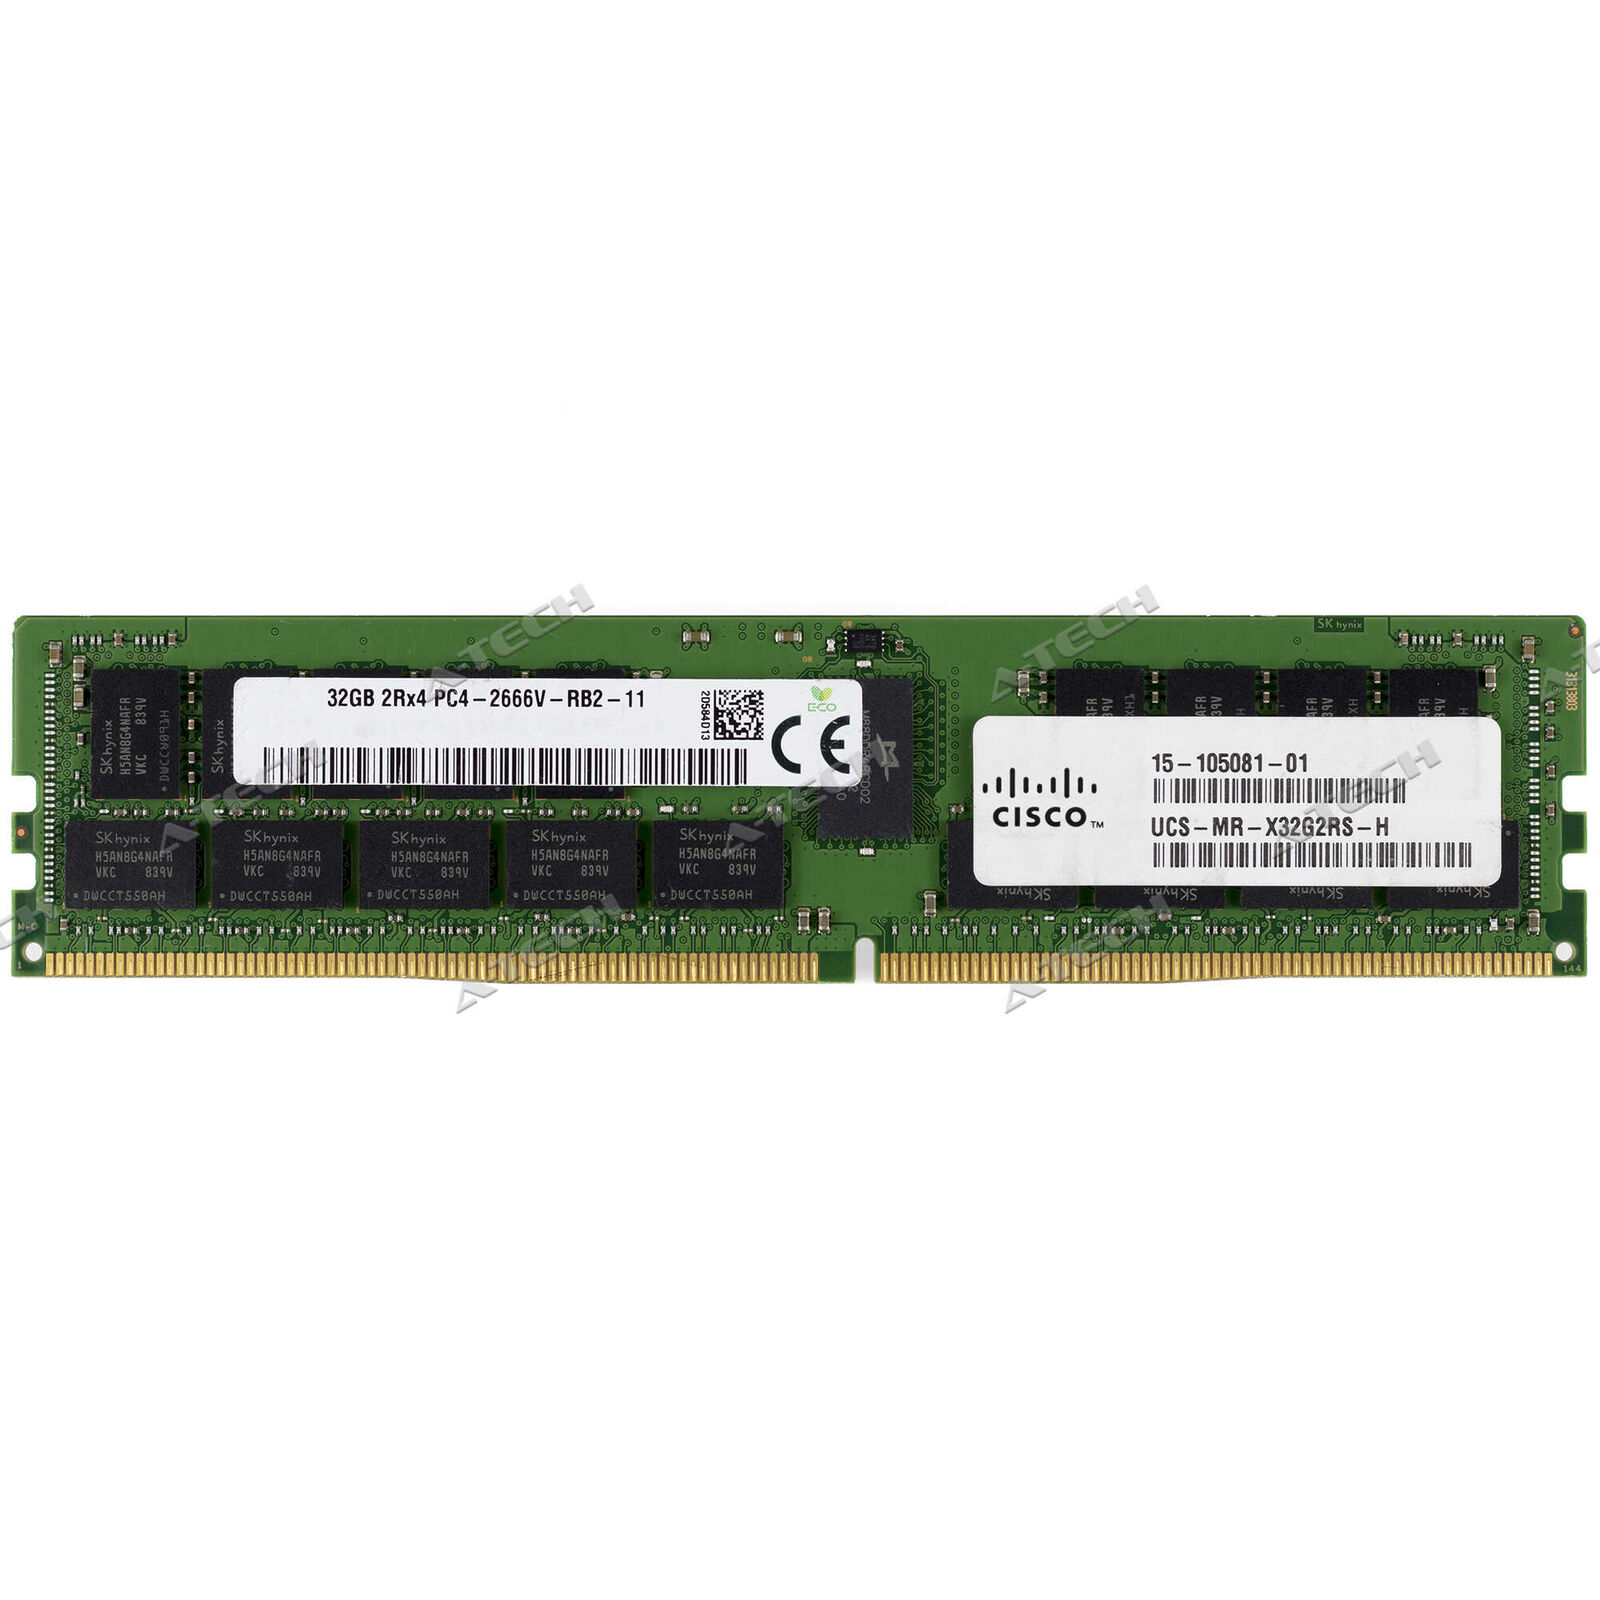 Cisco 32GB DDR4-2666 REG RDIMM UCS-MR-X32G2RS-H 15-105081-01 Server Memory RAM